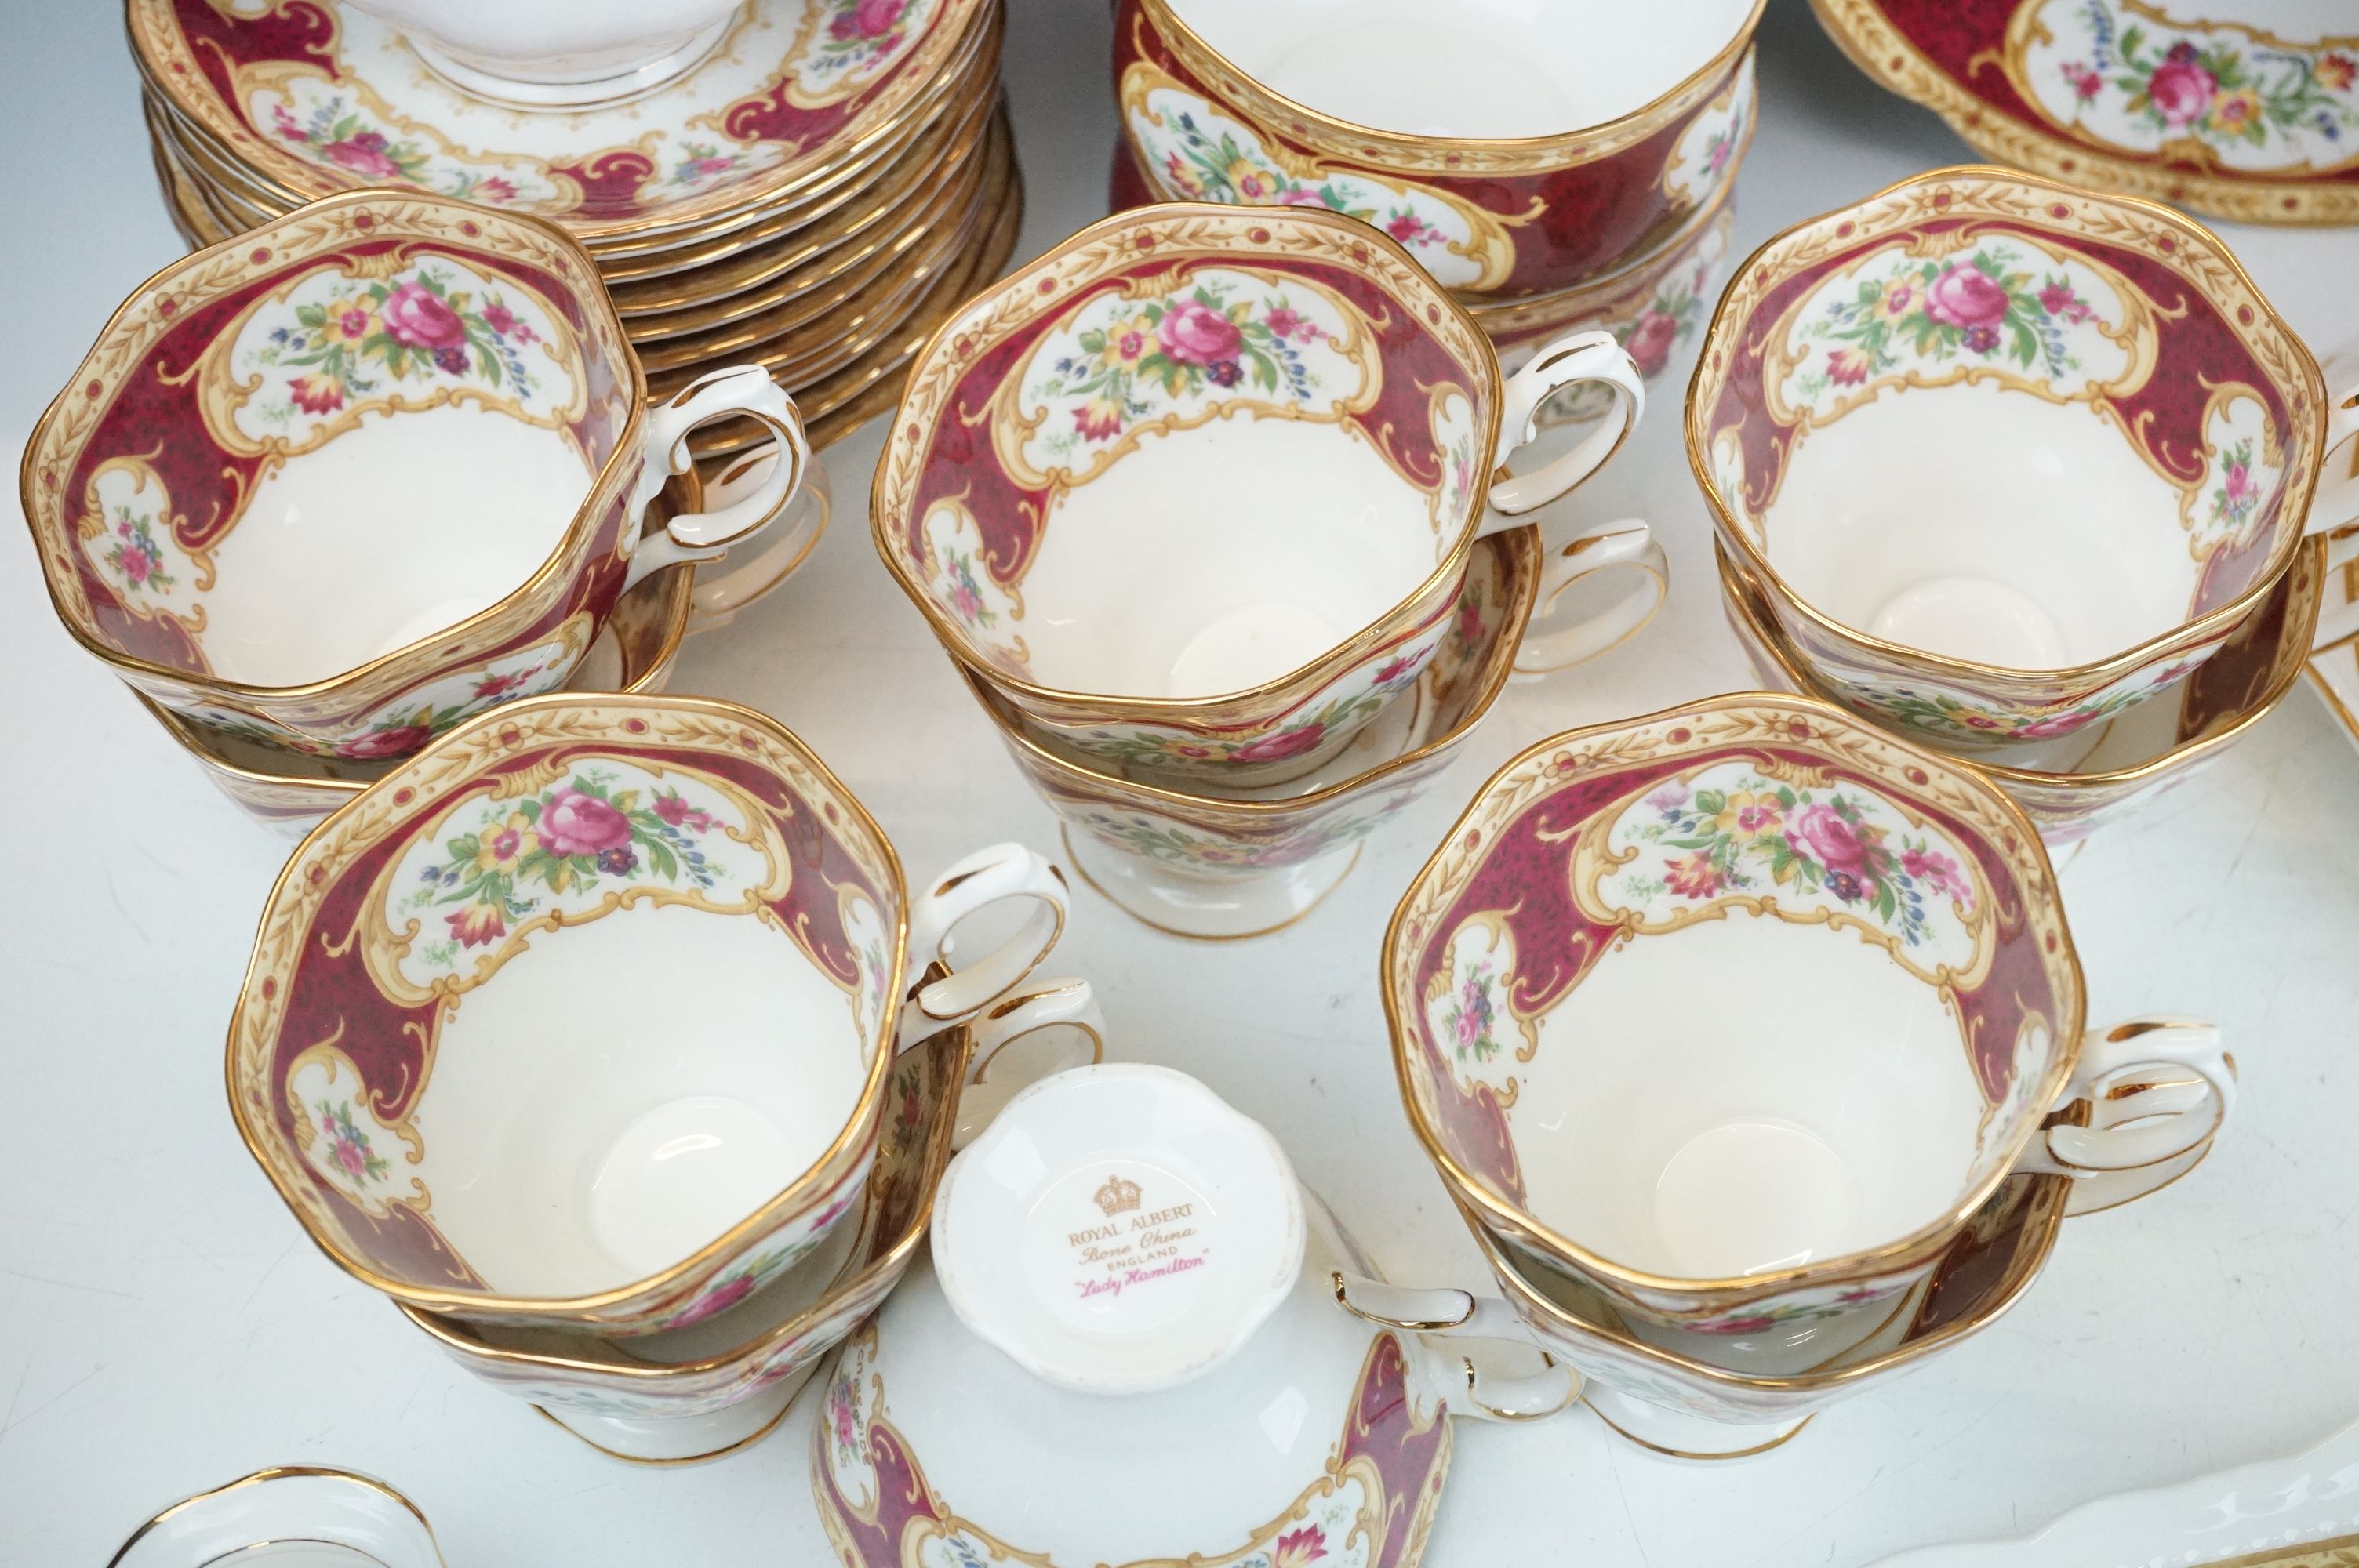 Royal Albert Lady Hamilton tea service consisting of 12 tea cups, 11 saucers, two creamer jugs, salt - Image 5 of 11